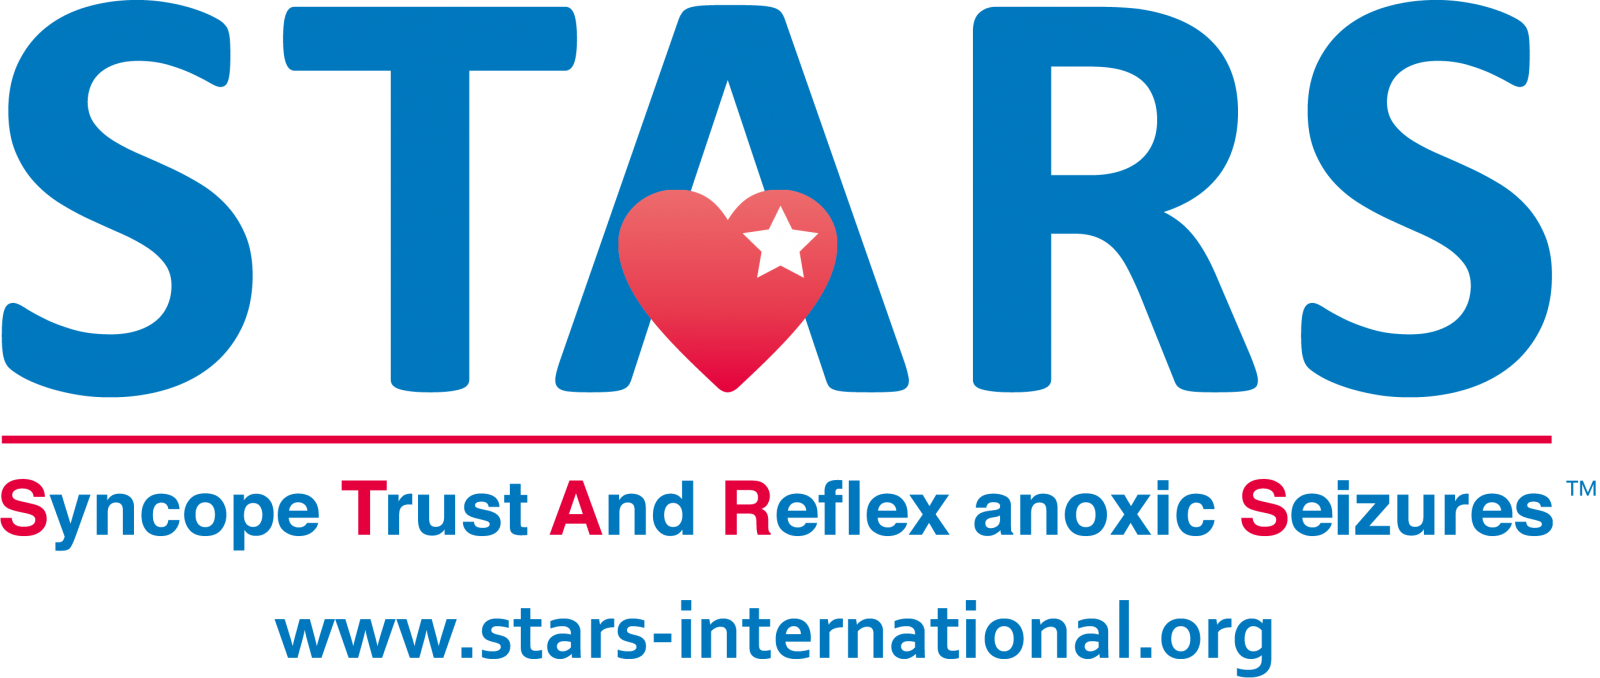 STARS PoTS Patients Day